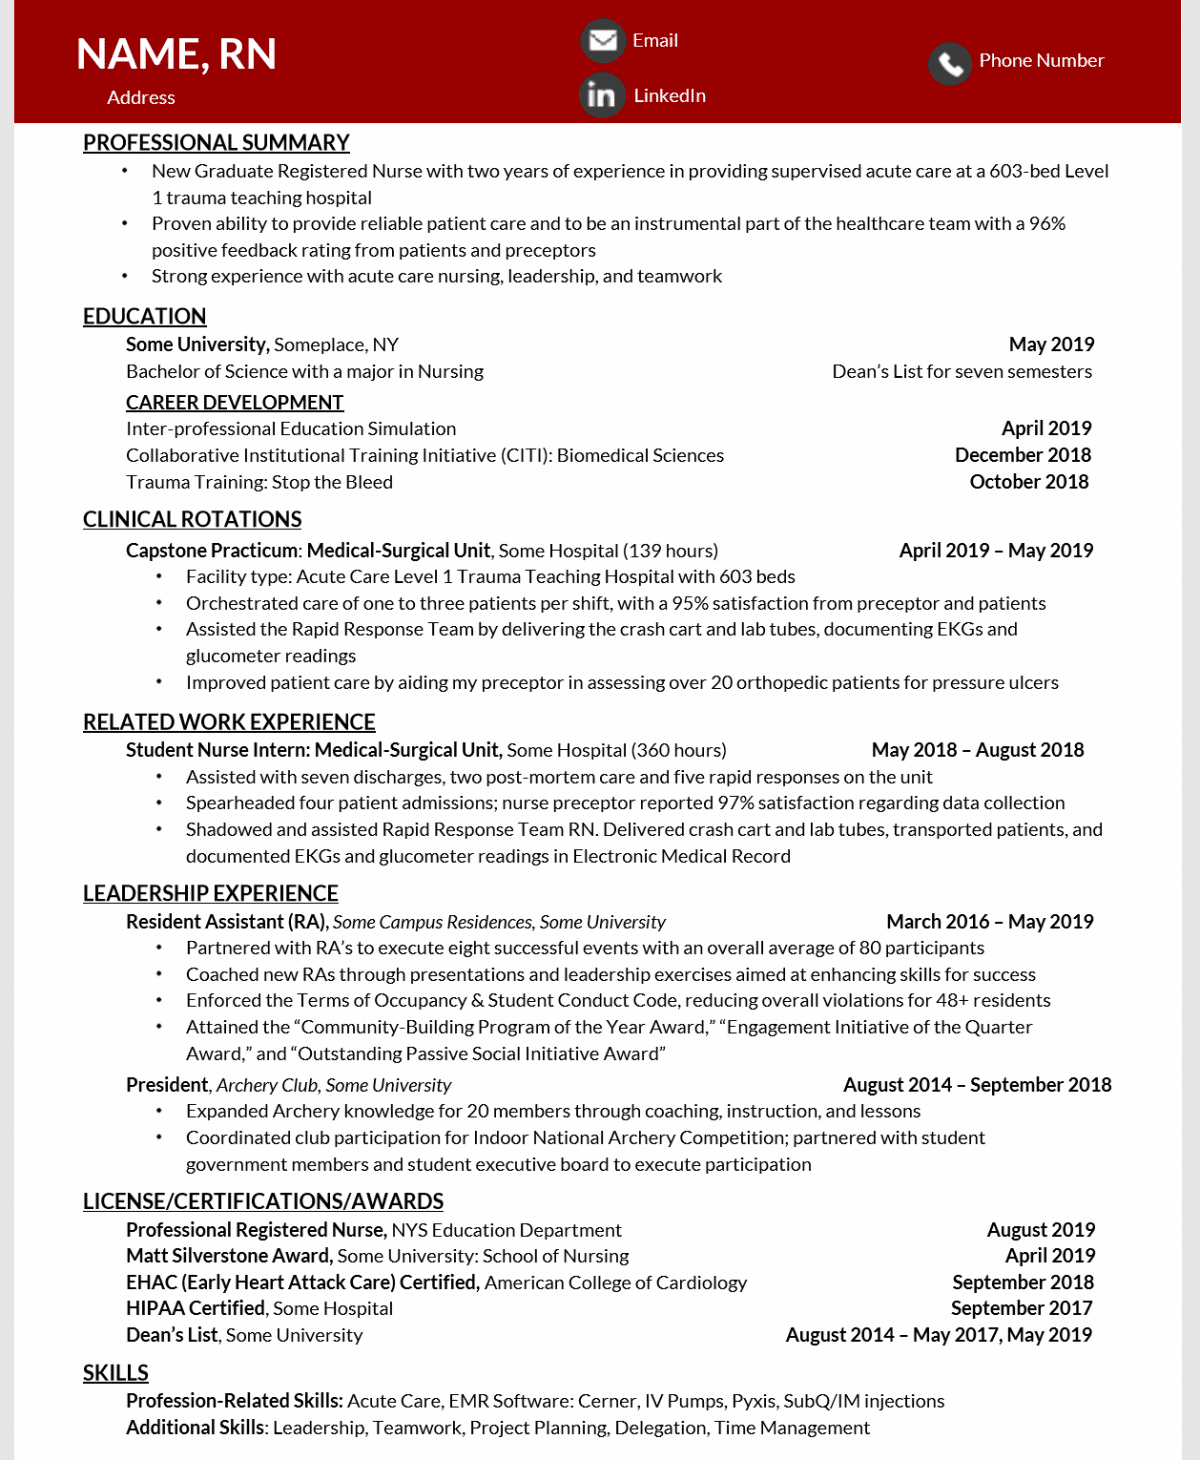 New Grad RN Resume Advice Needed!